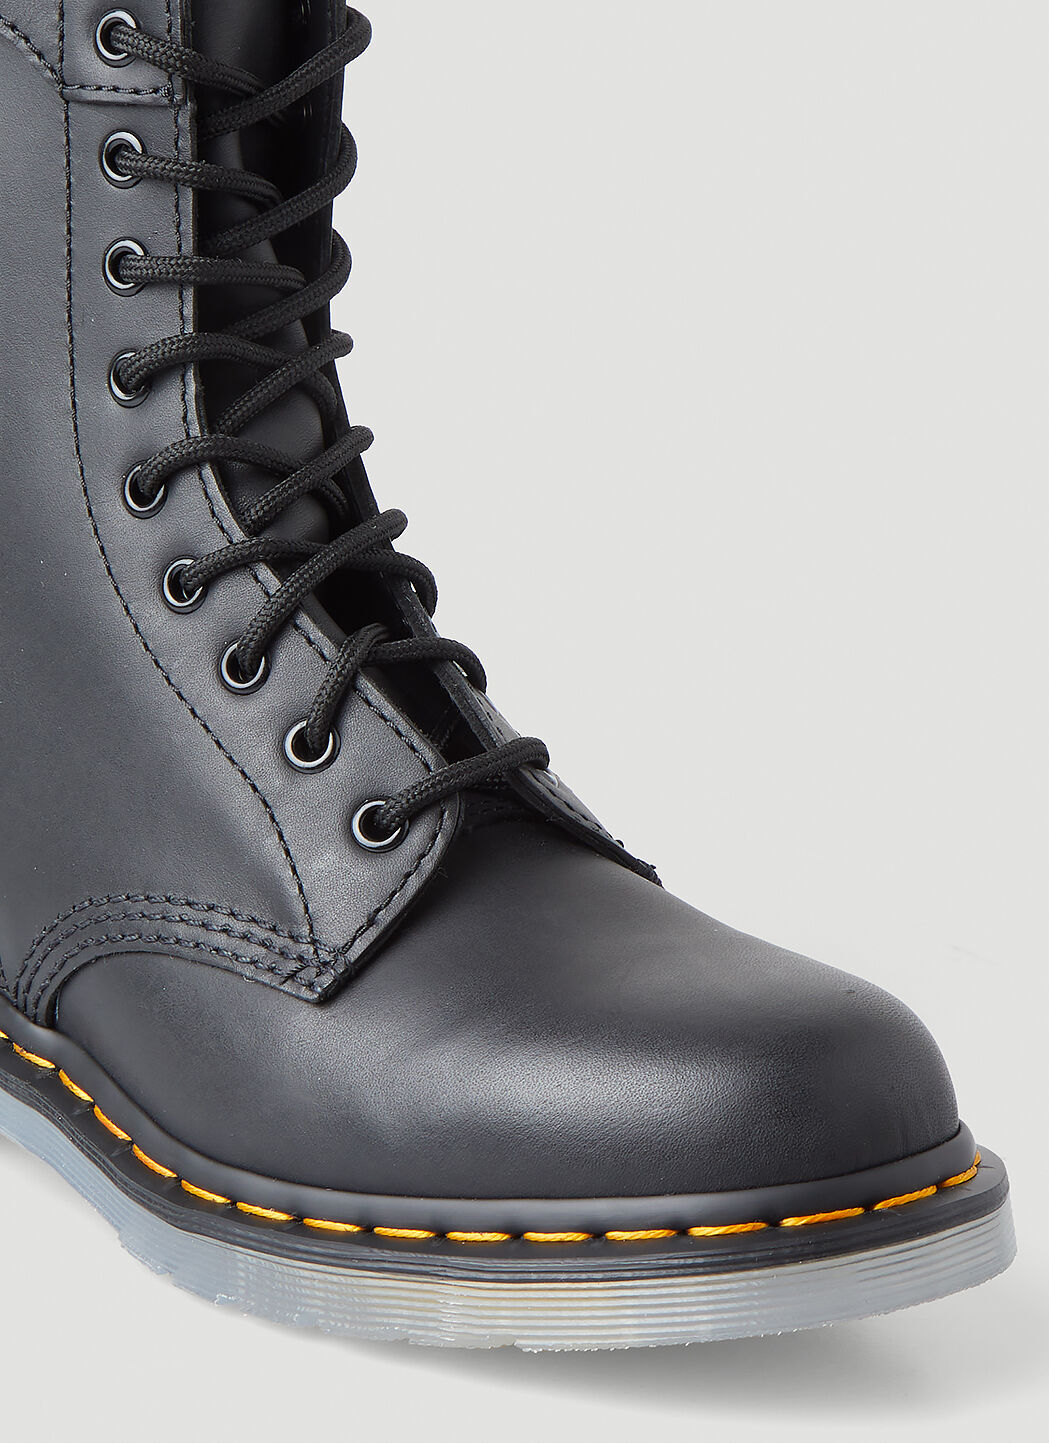 Yohji Yamamoto x Dr Martens 1490 High Top Boots in Black | LN-CC®